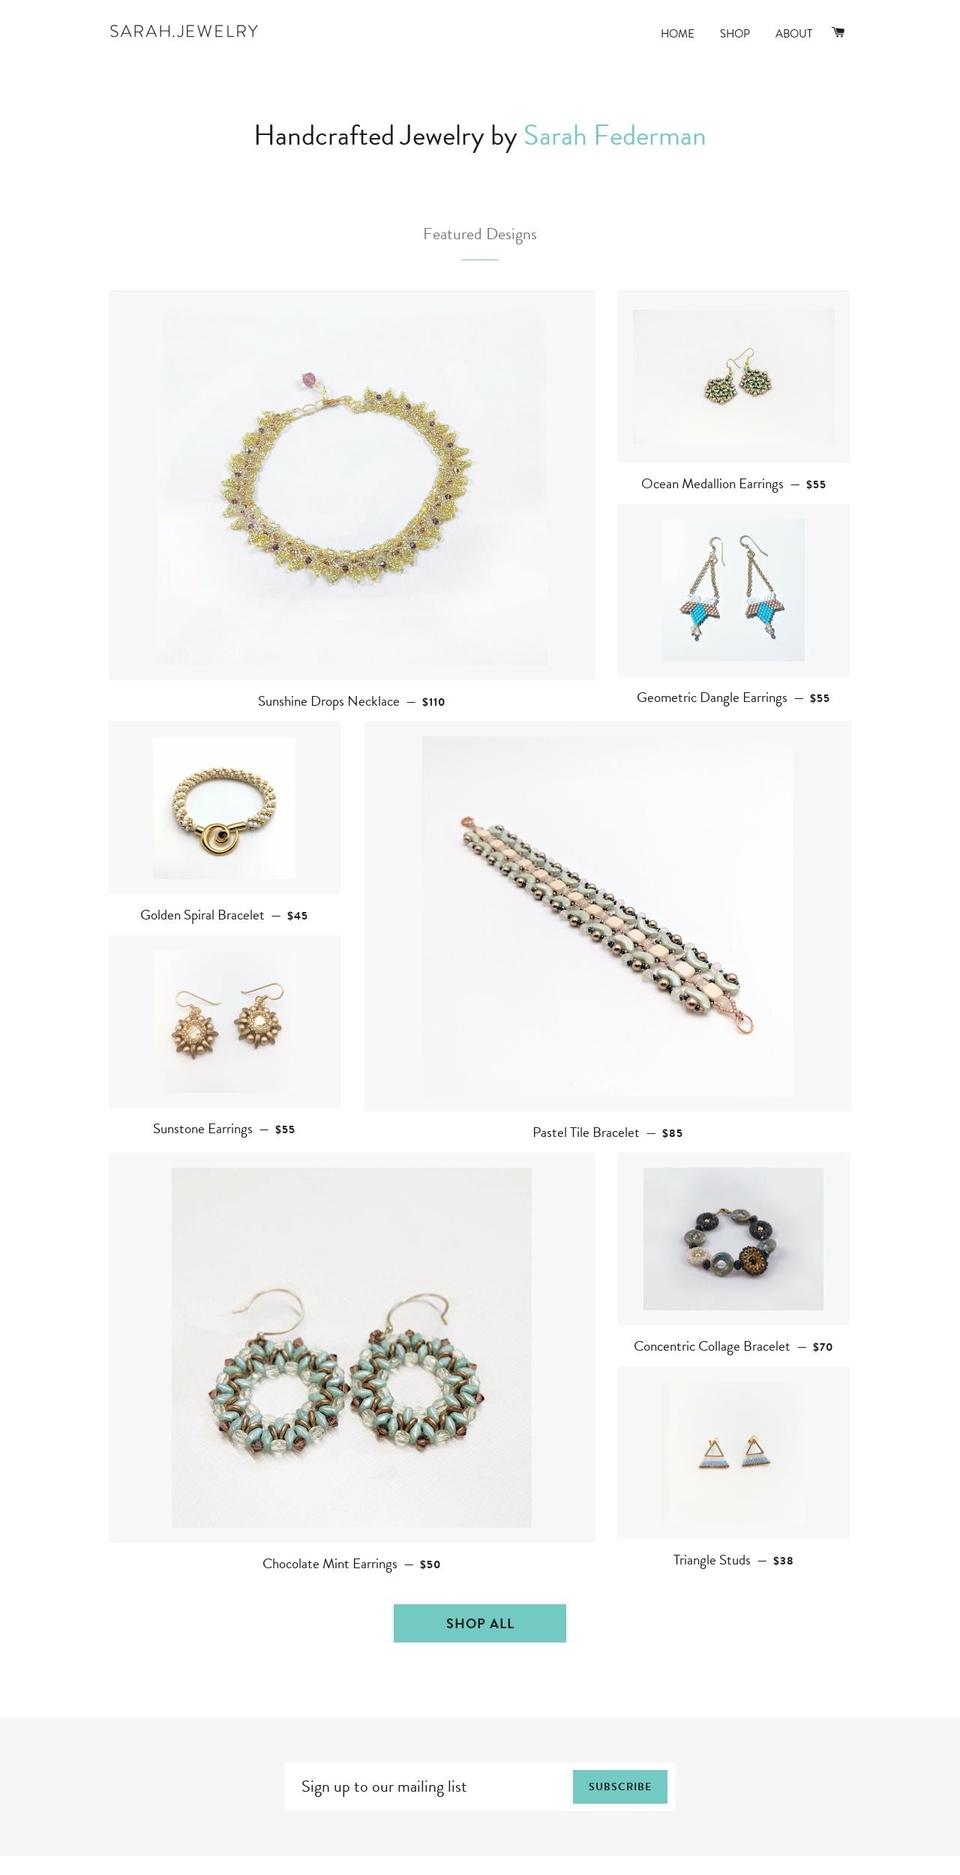 sarah.jewelry shopify website screenshot